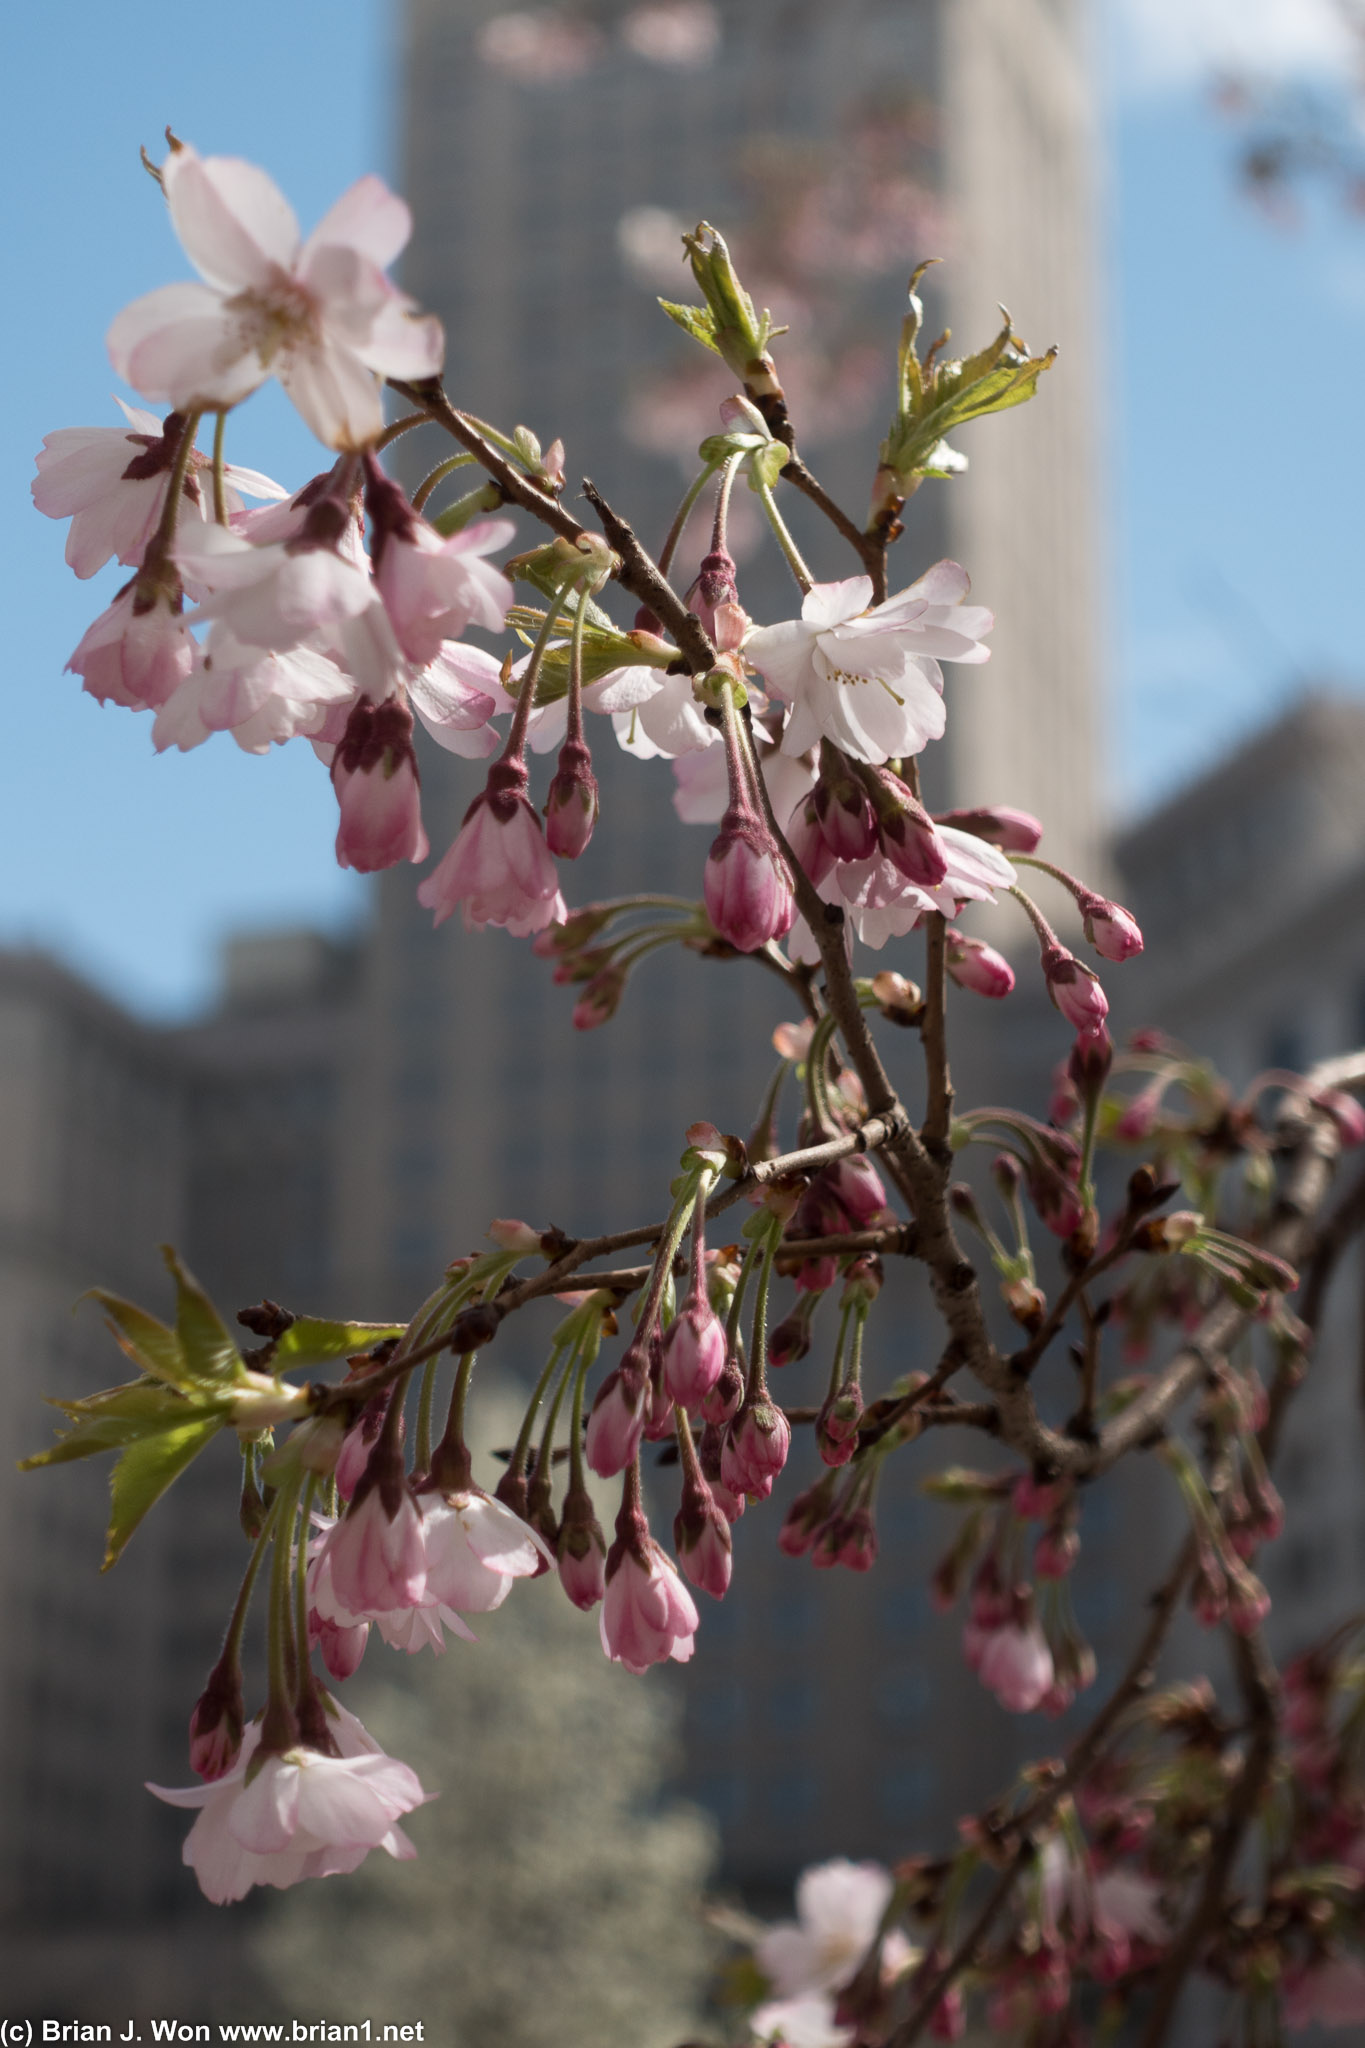 Cherry blossom season isn't til mid-April this far north?